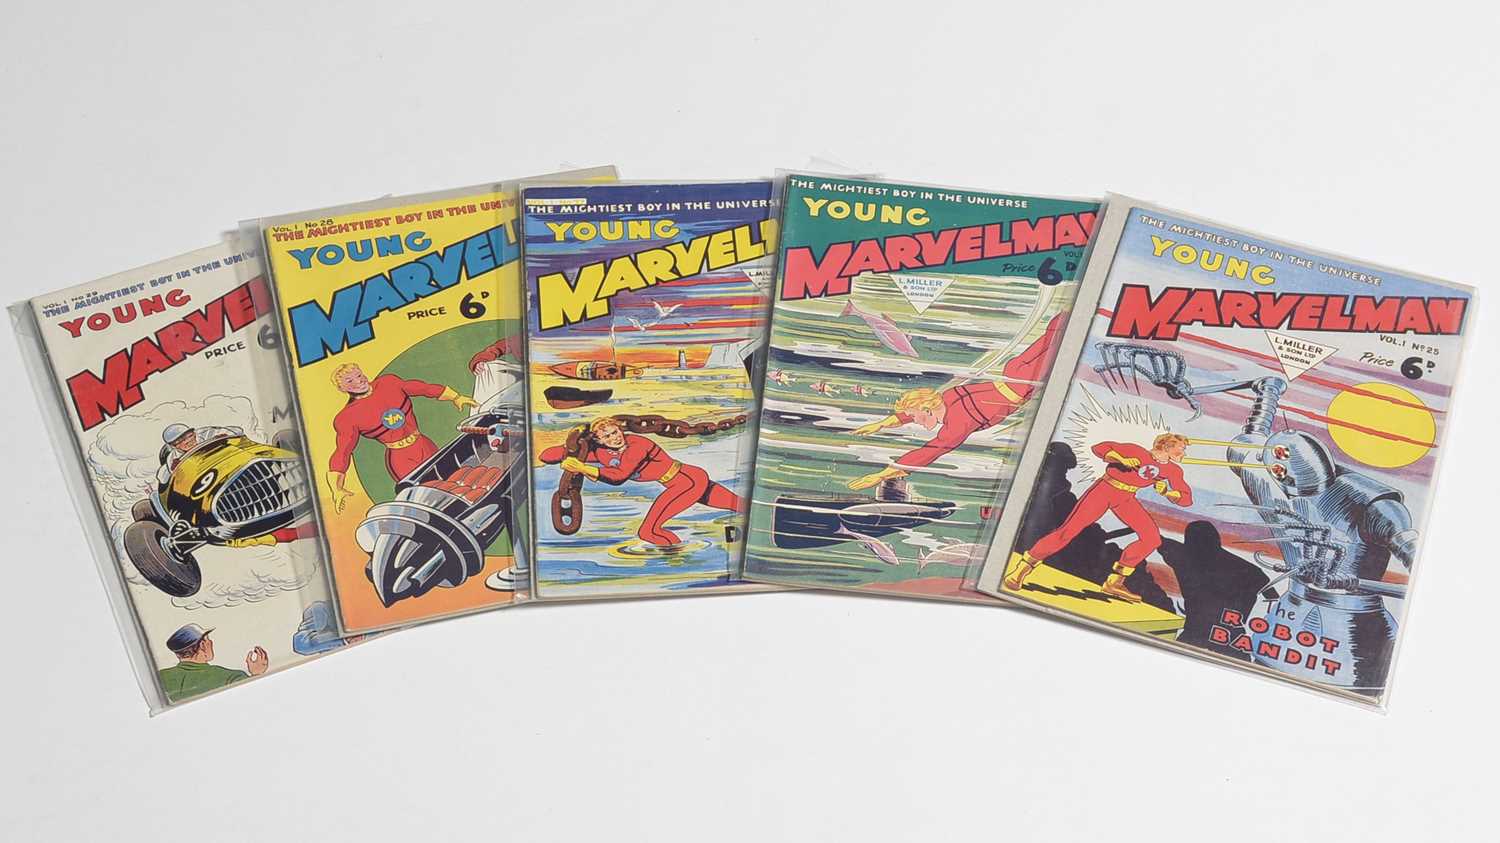 Young Marvelman Vol.1